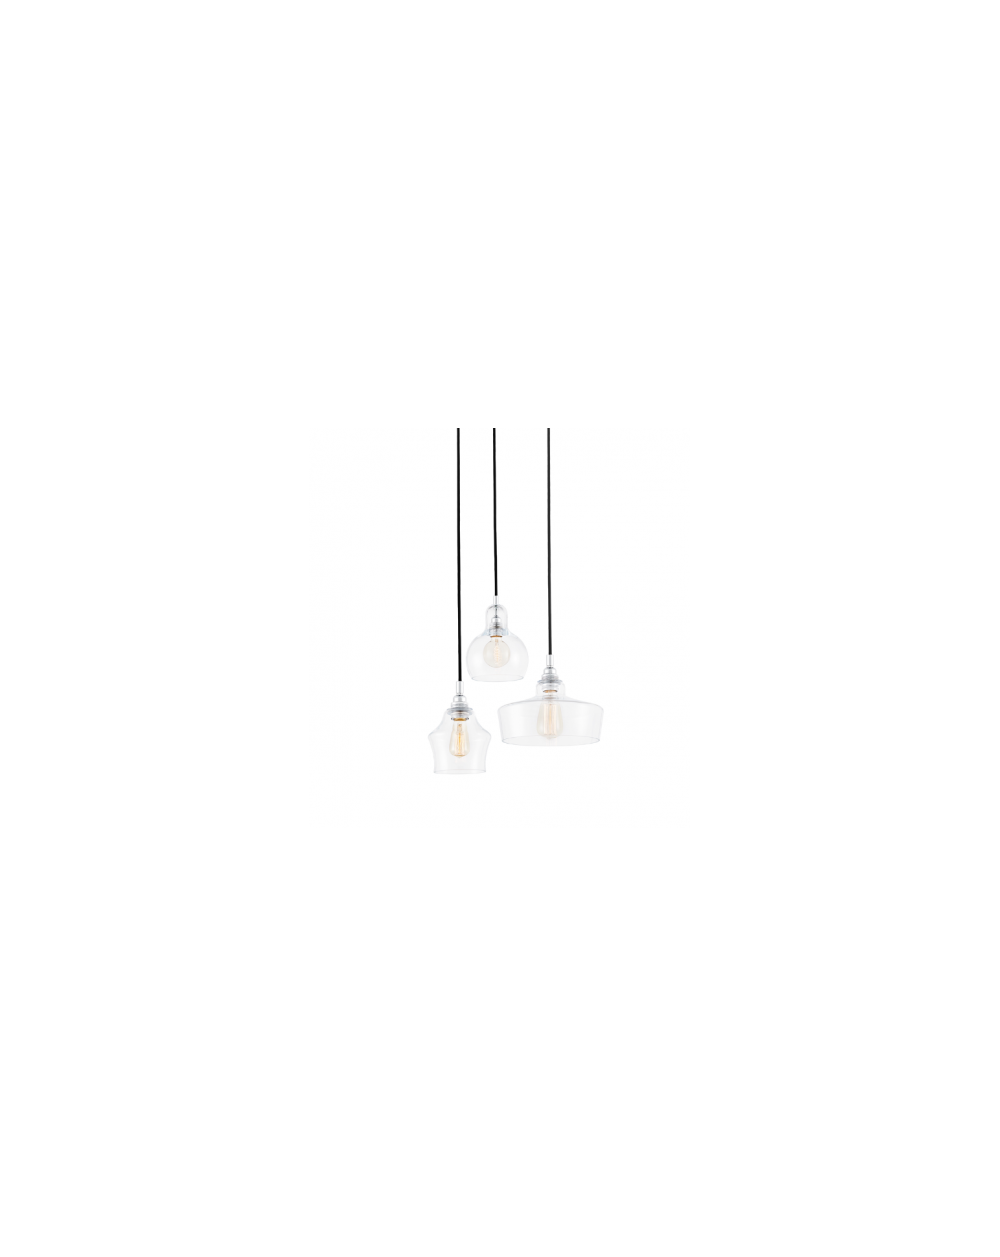 Longis Plafon 3 lampa wisząca szklana - Kaspa